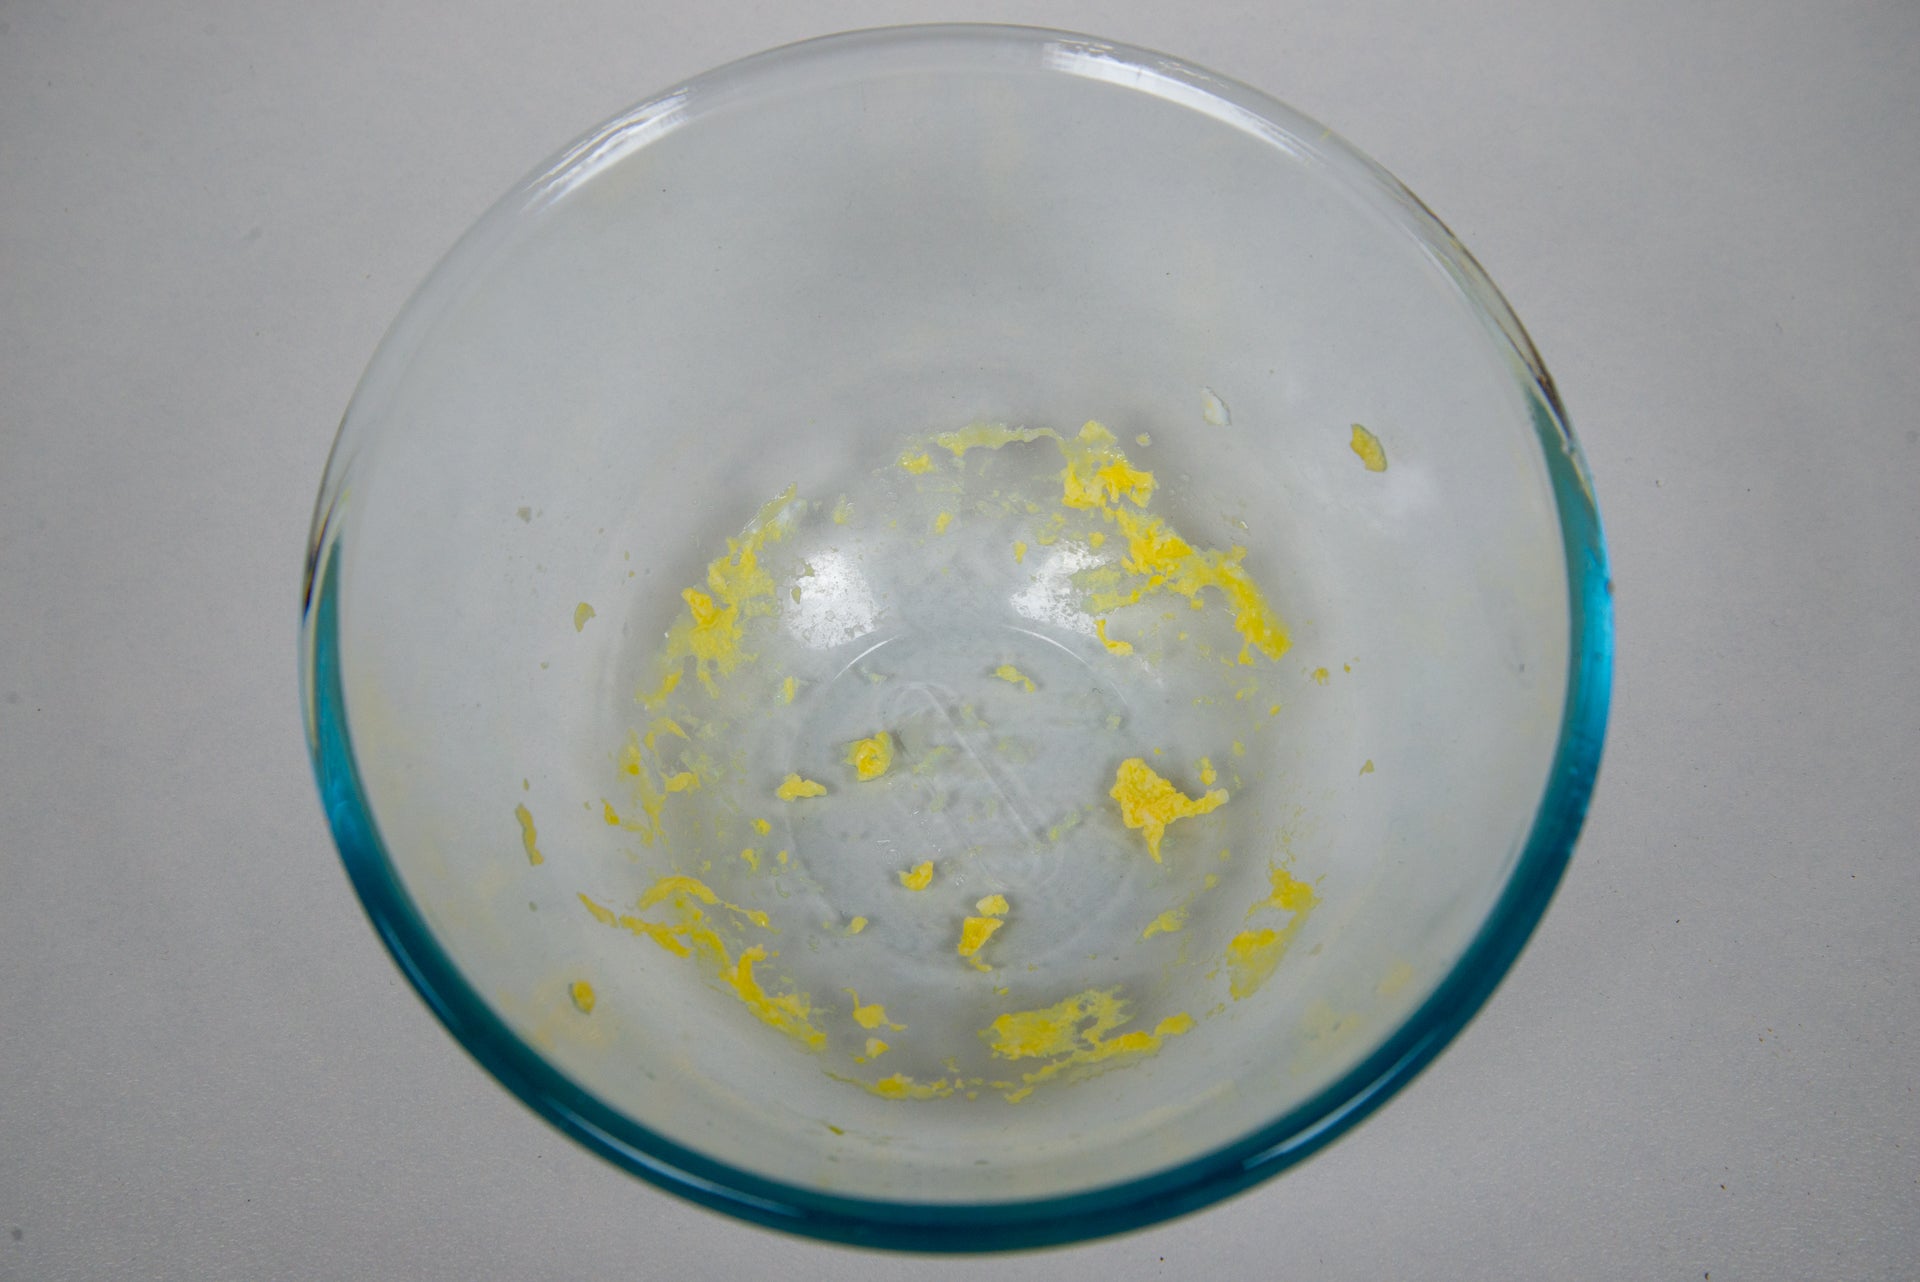 Miele G5310SC eggy bowl dirty